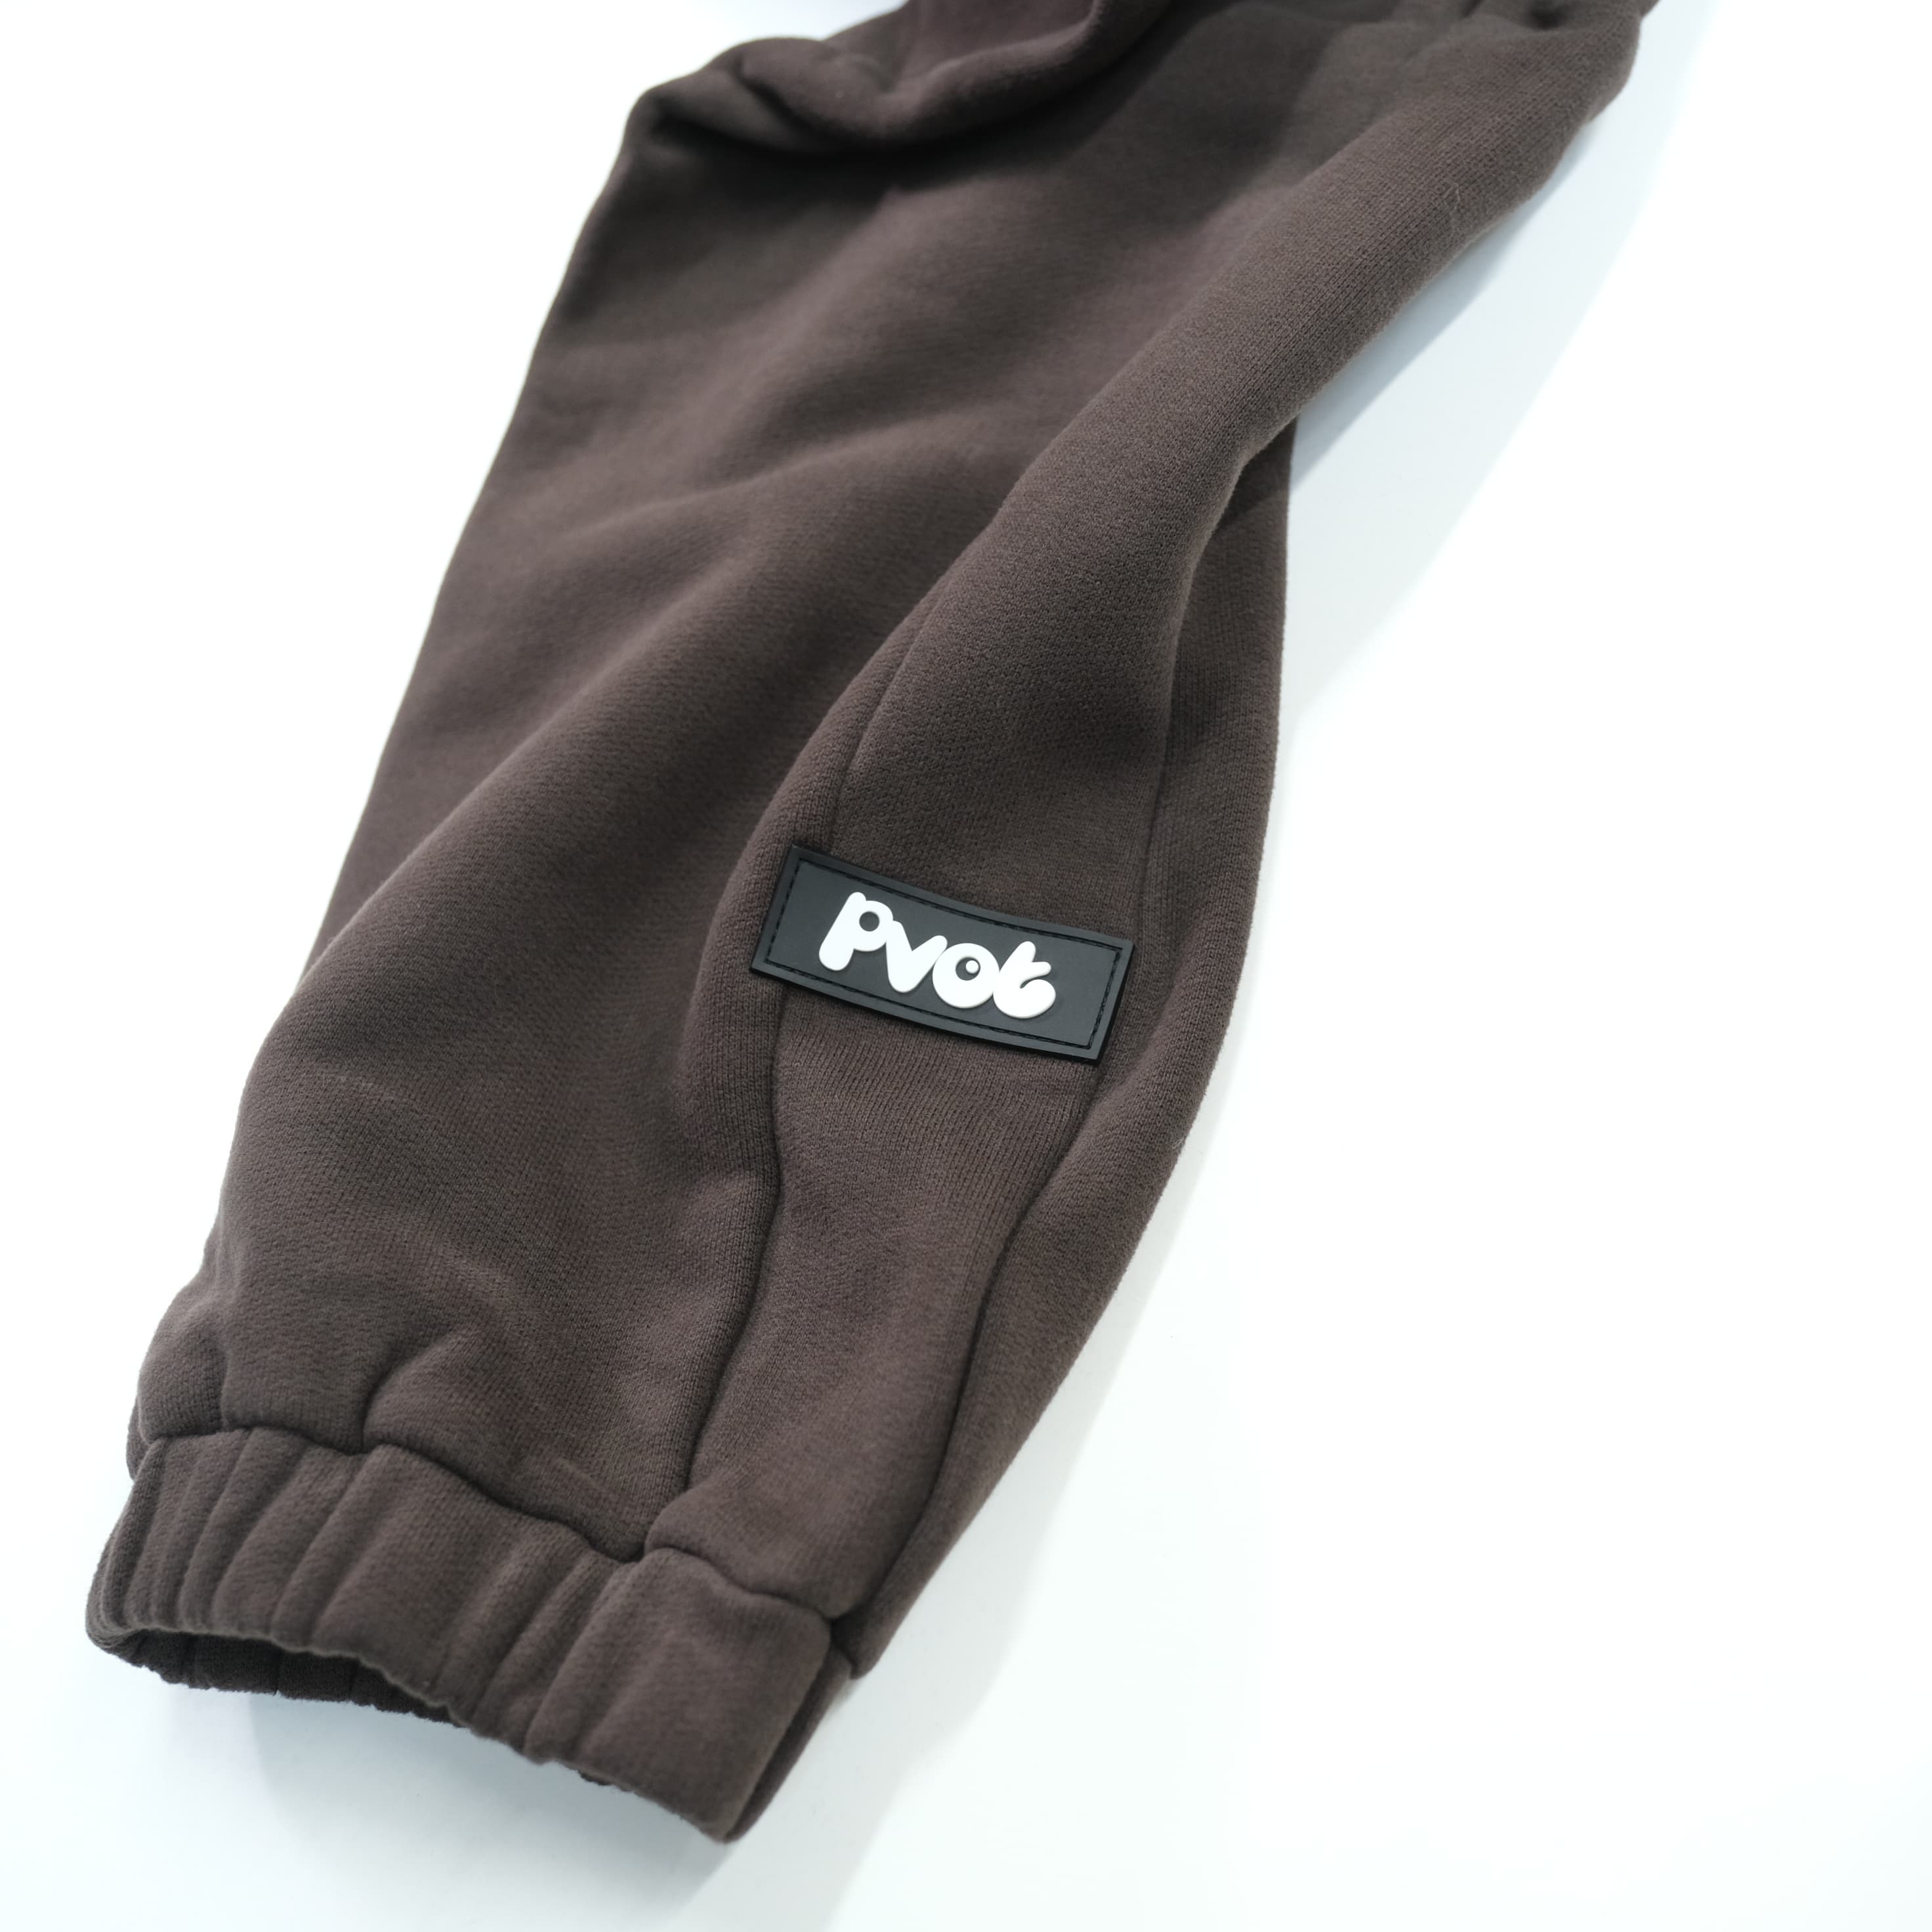 Pvot Premium Sweat Pants (Charcoal Brown)